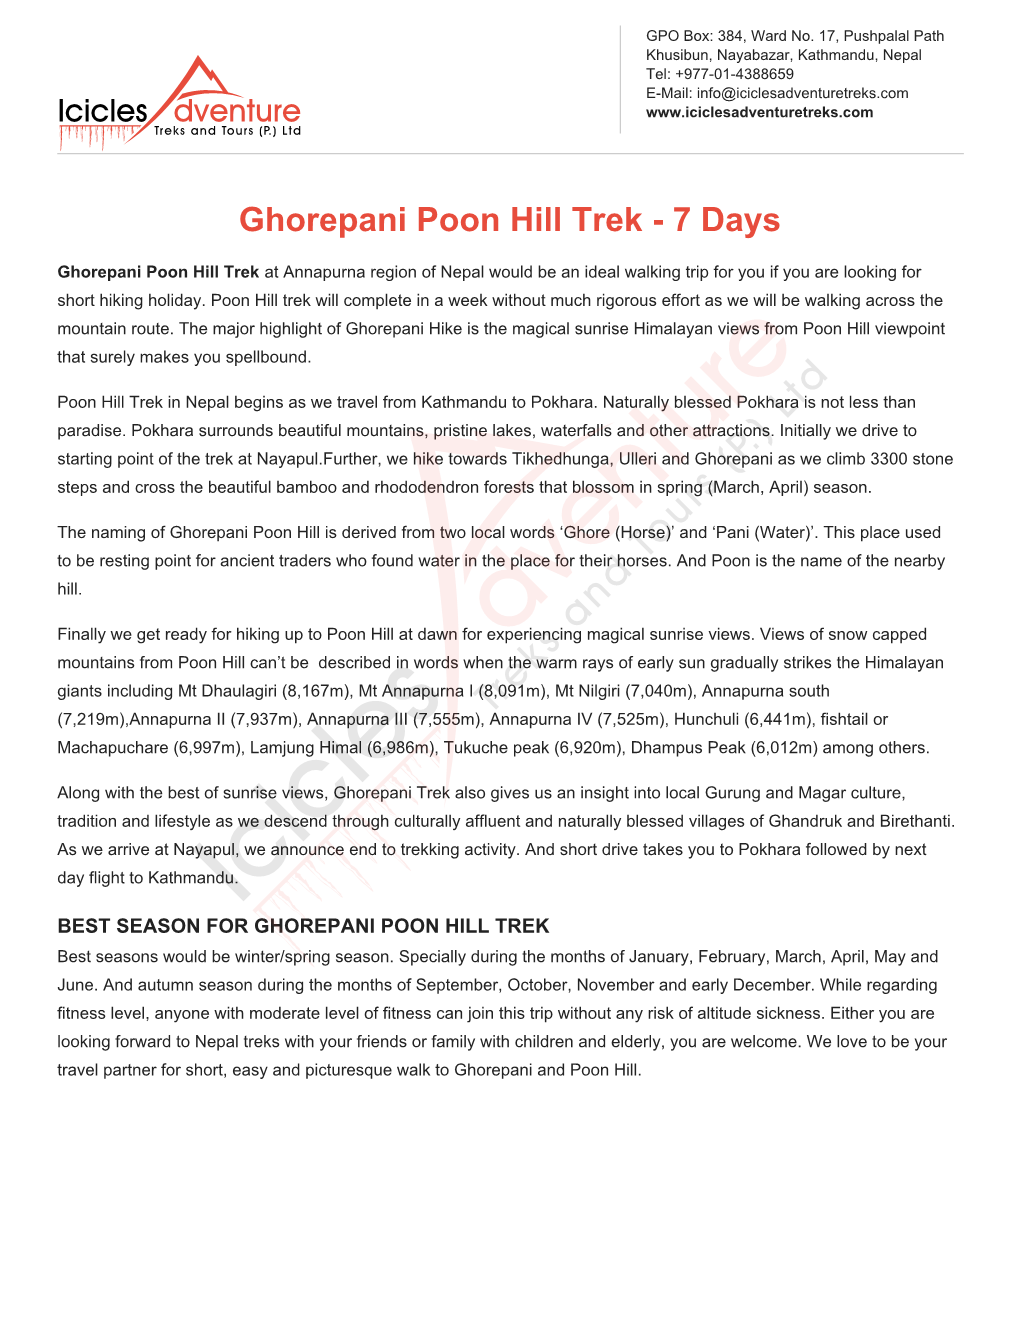 Ghorepani Poon Hill Trek - 7 Days